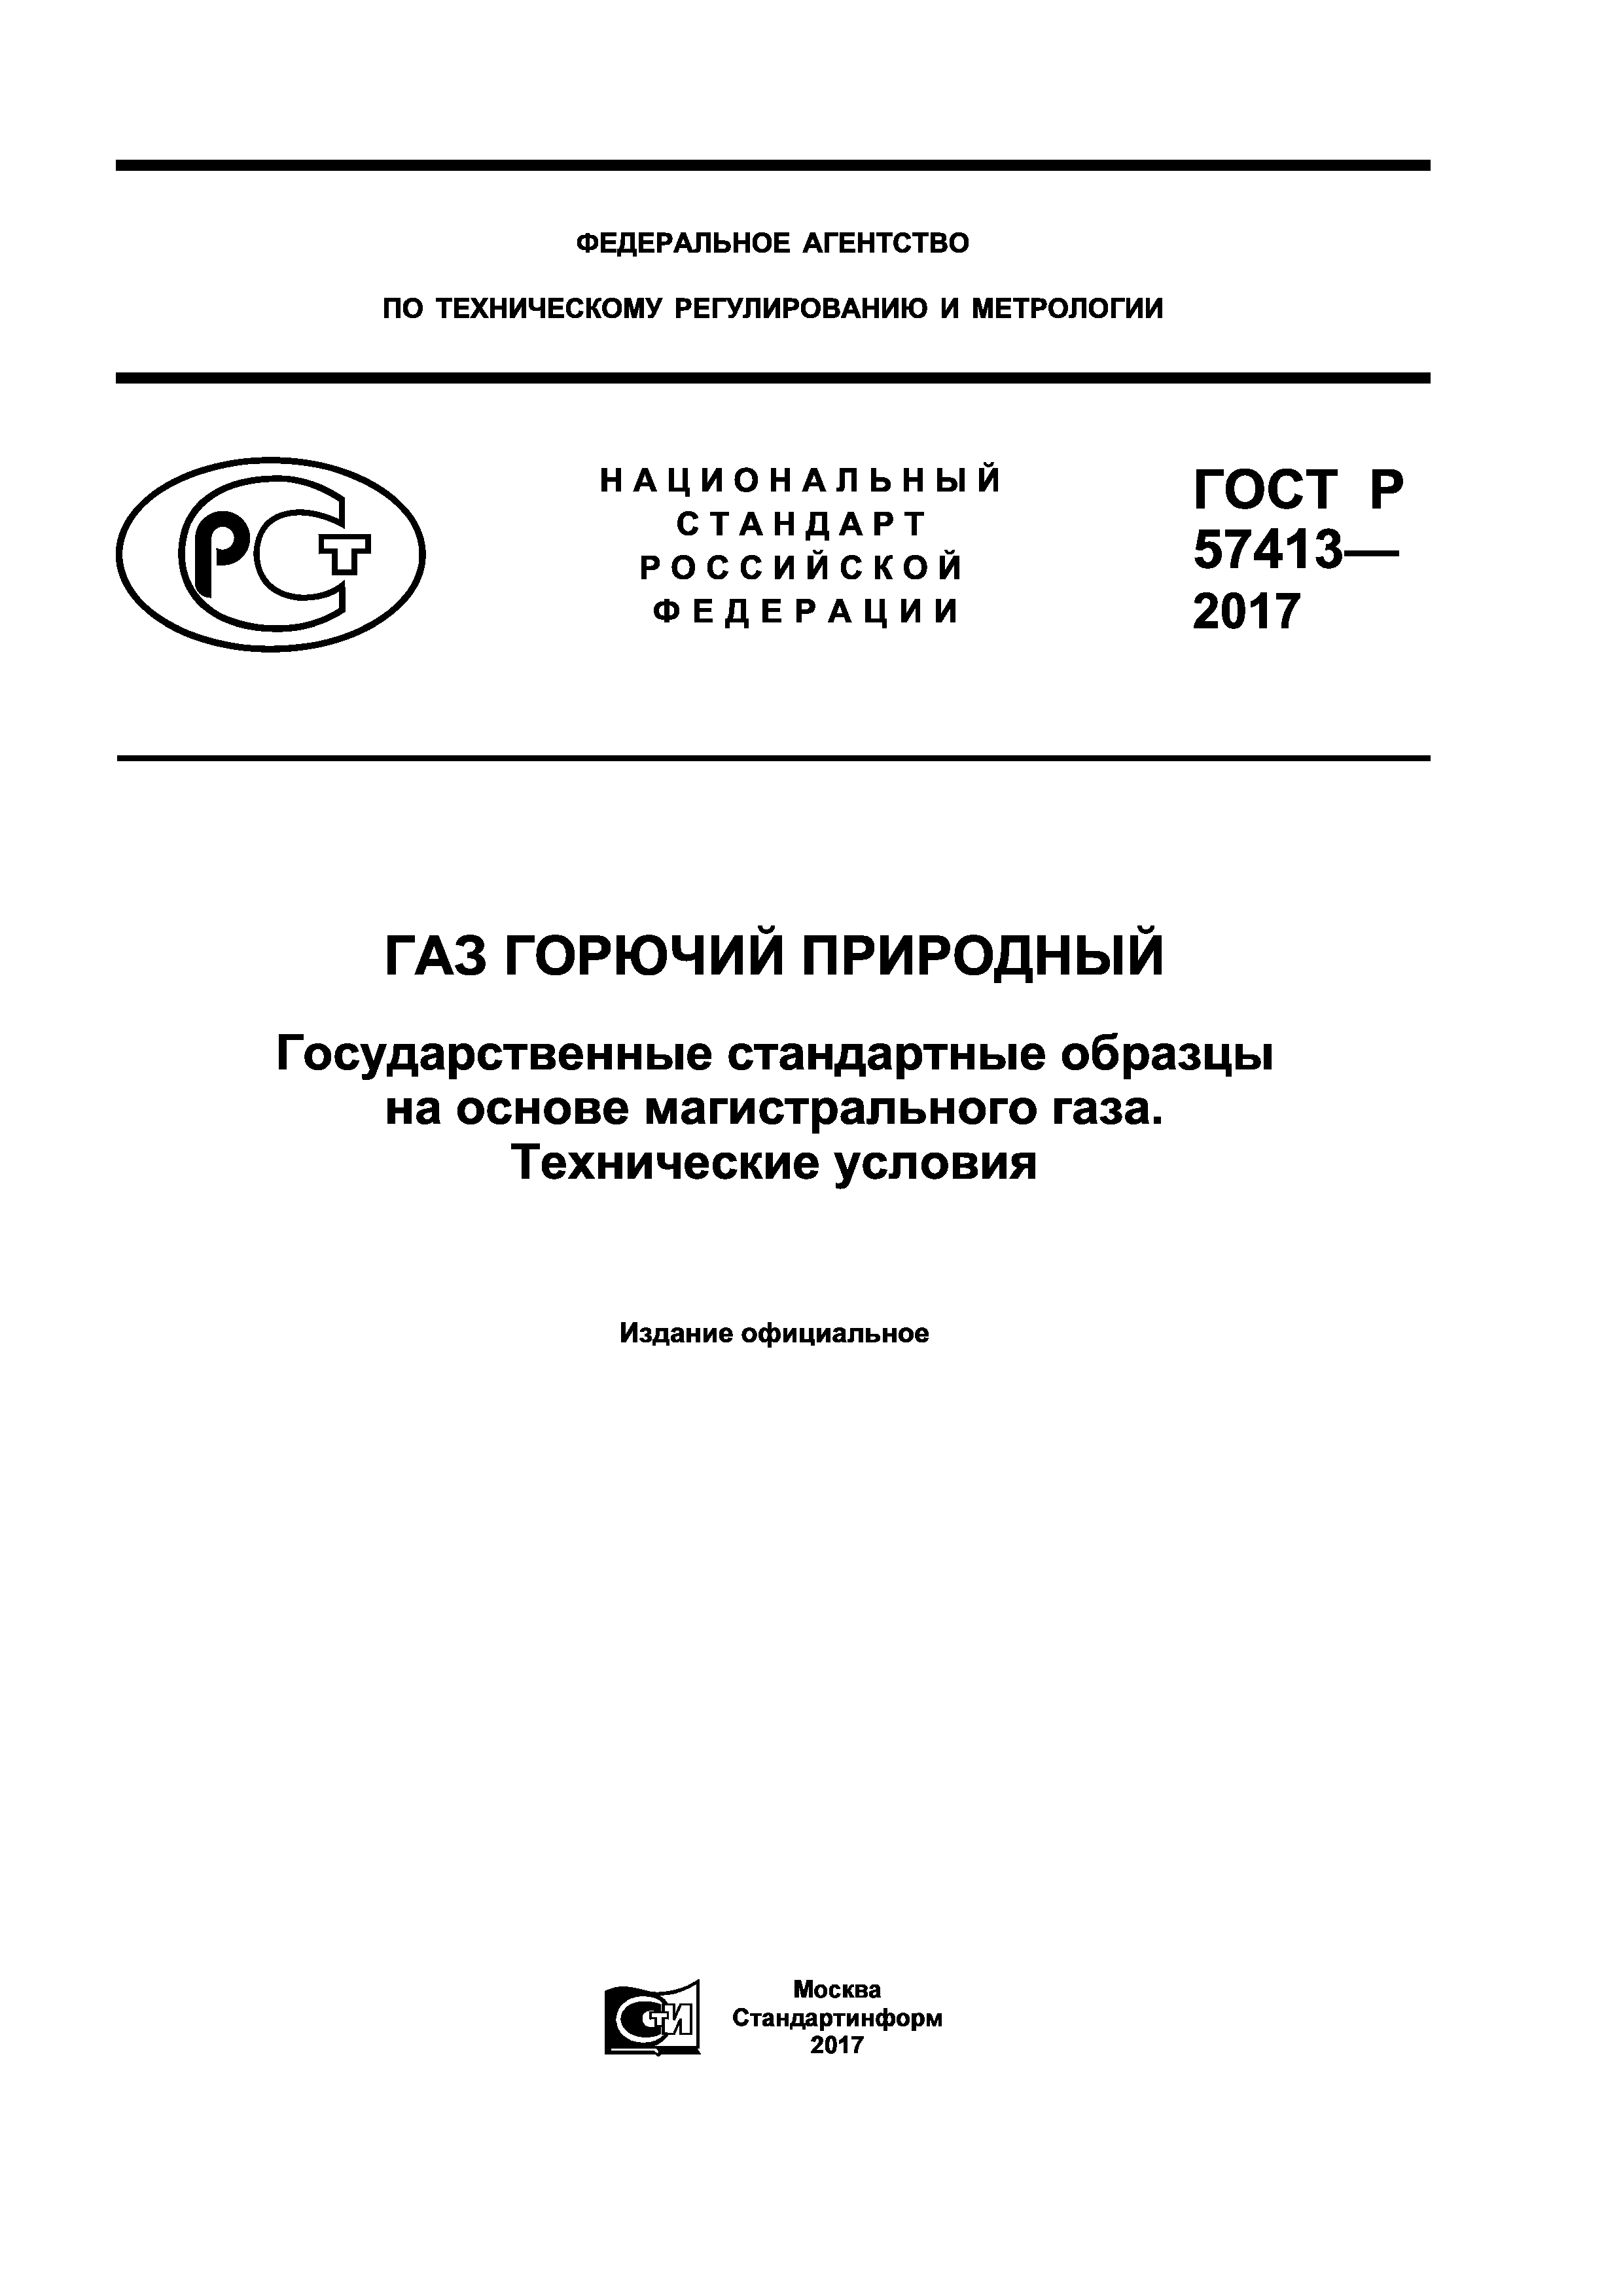 ГОСТ Р 57413-2017